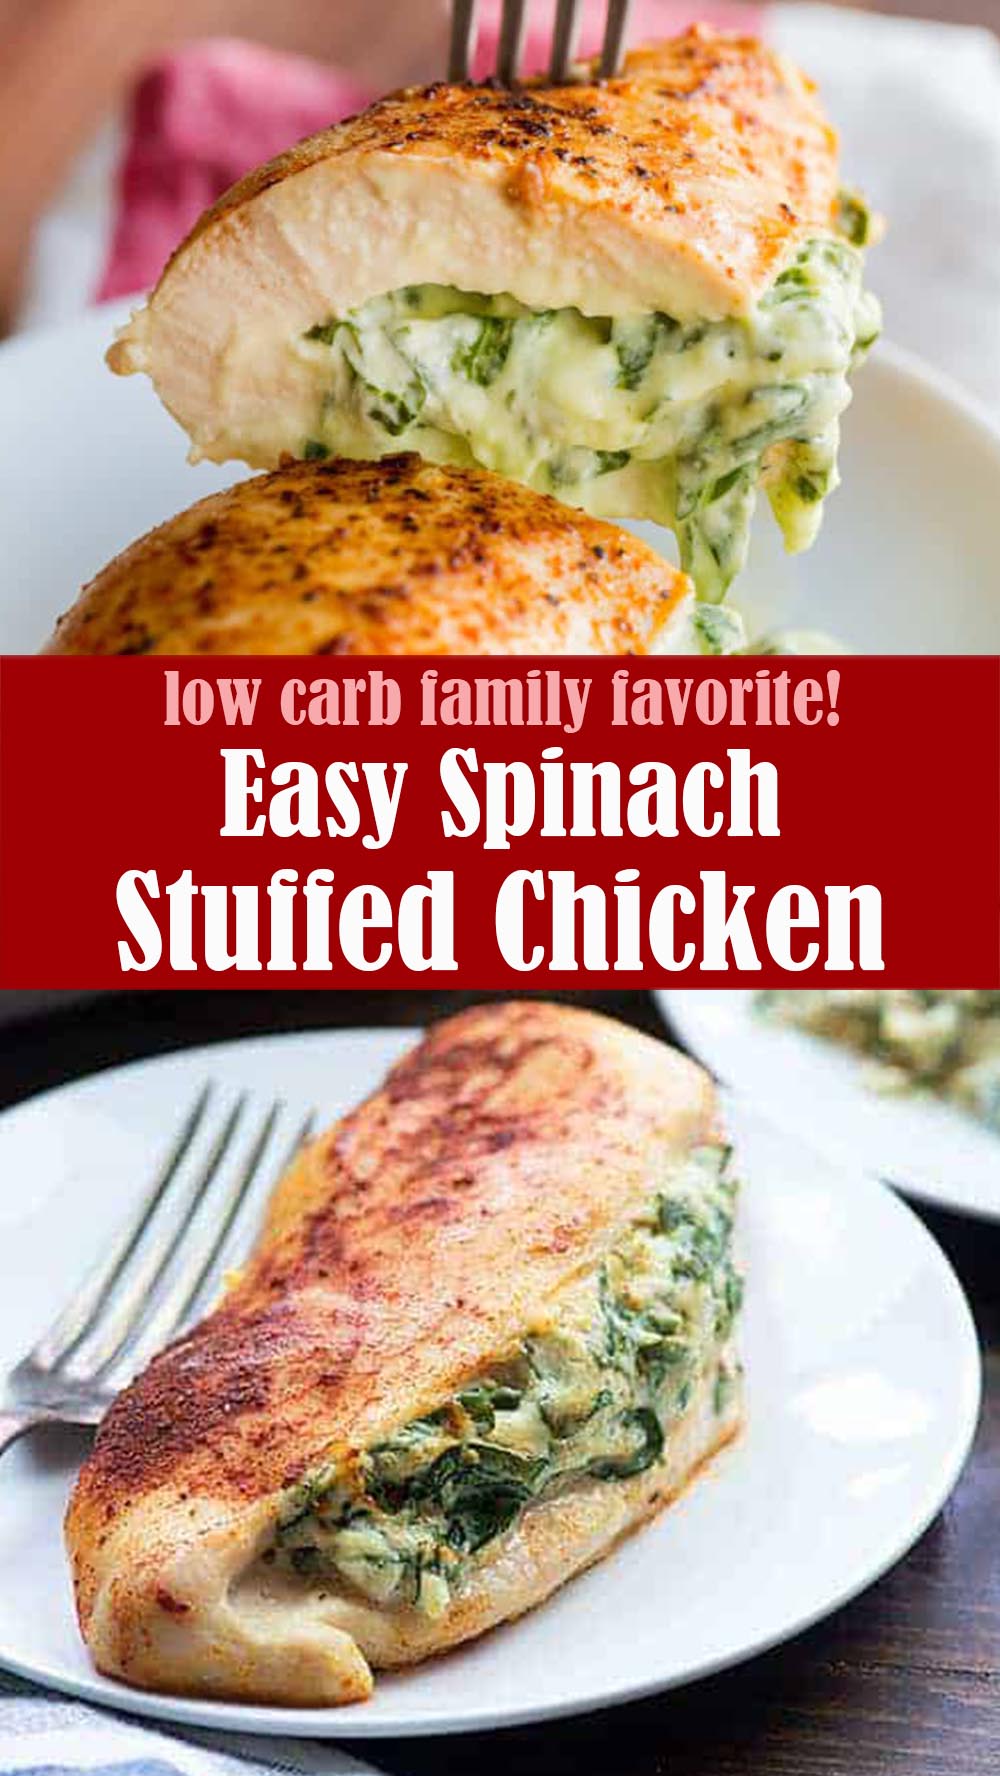 Easy Spinach Stuffed Chicken